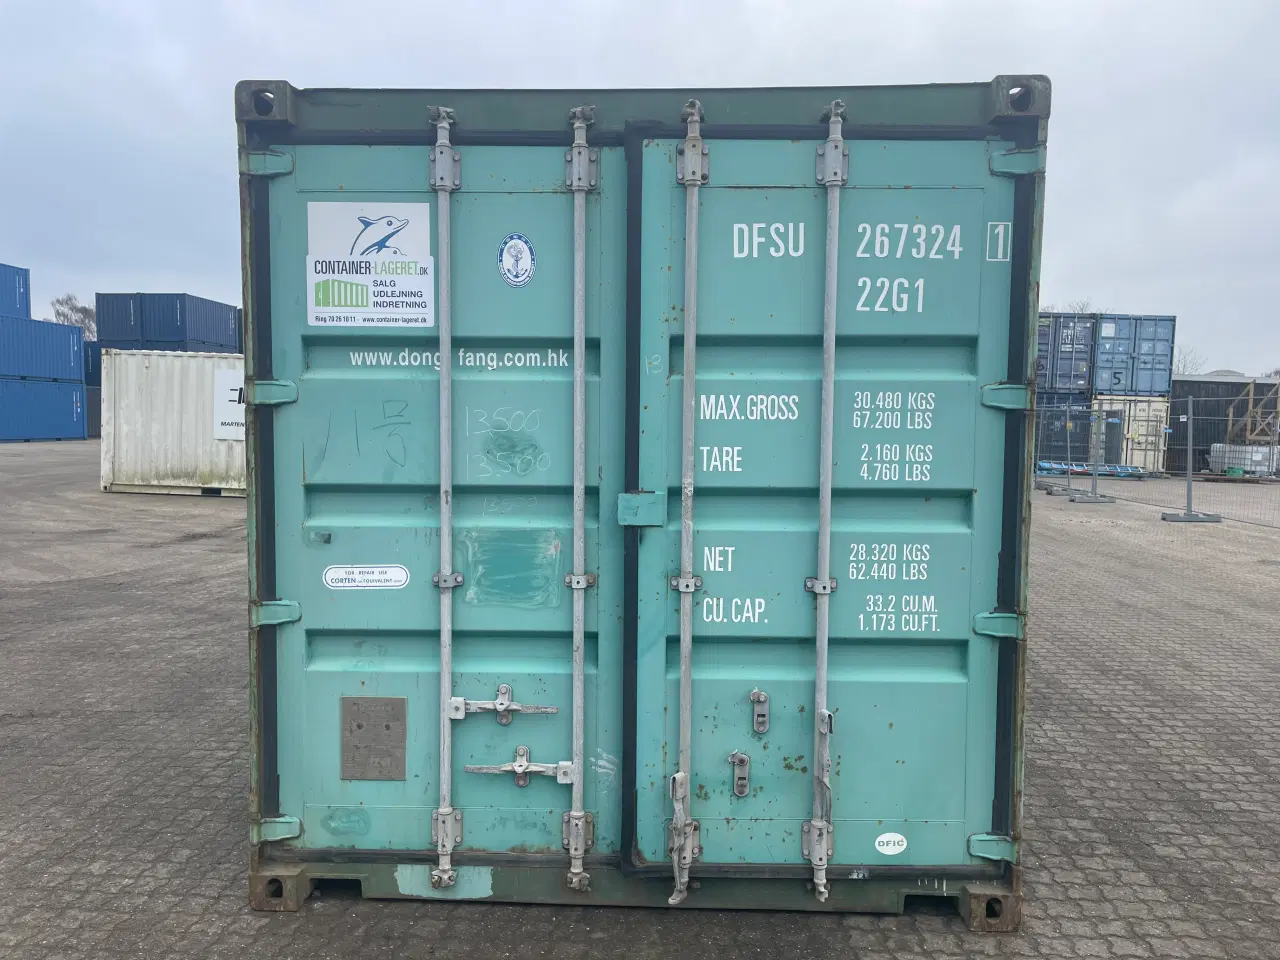 Billede 1 - 20 fods Container - ID: DFSU 267324-1